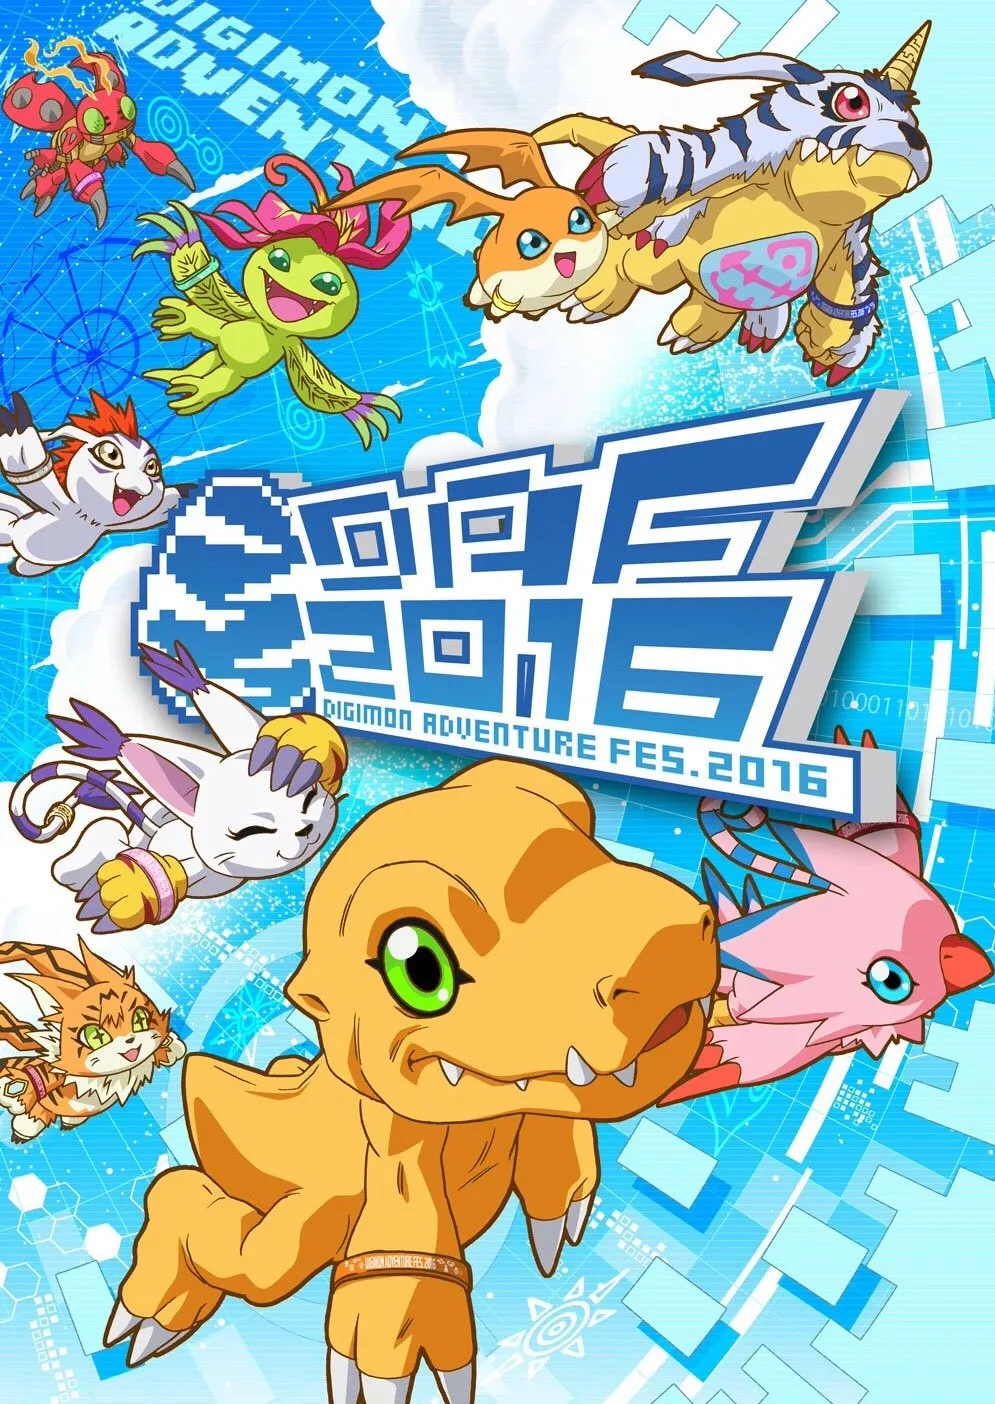 Digimon Adventure Fes. 2016